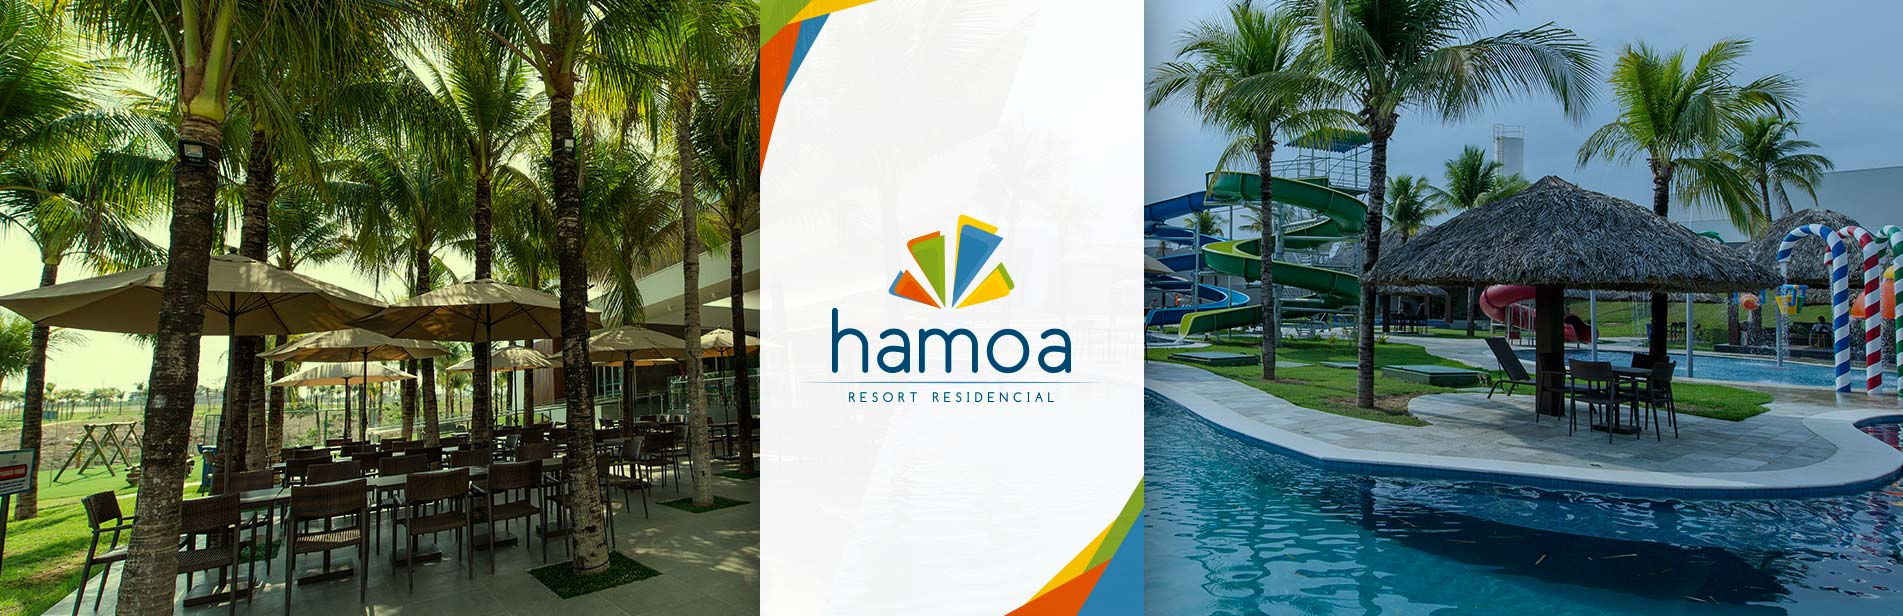 hamoa resort